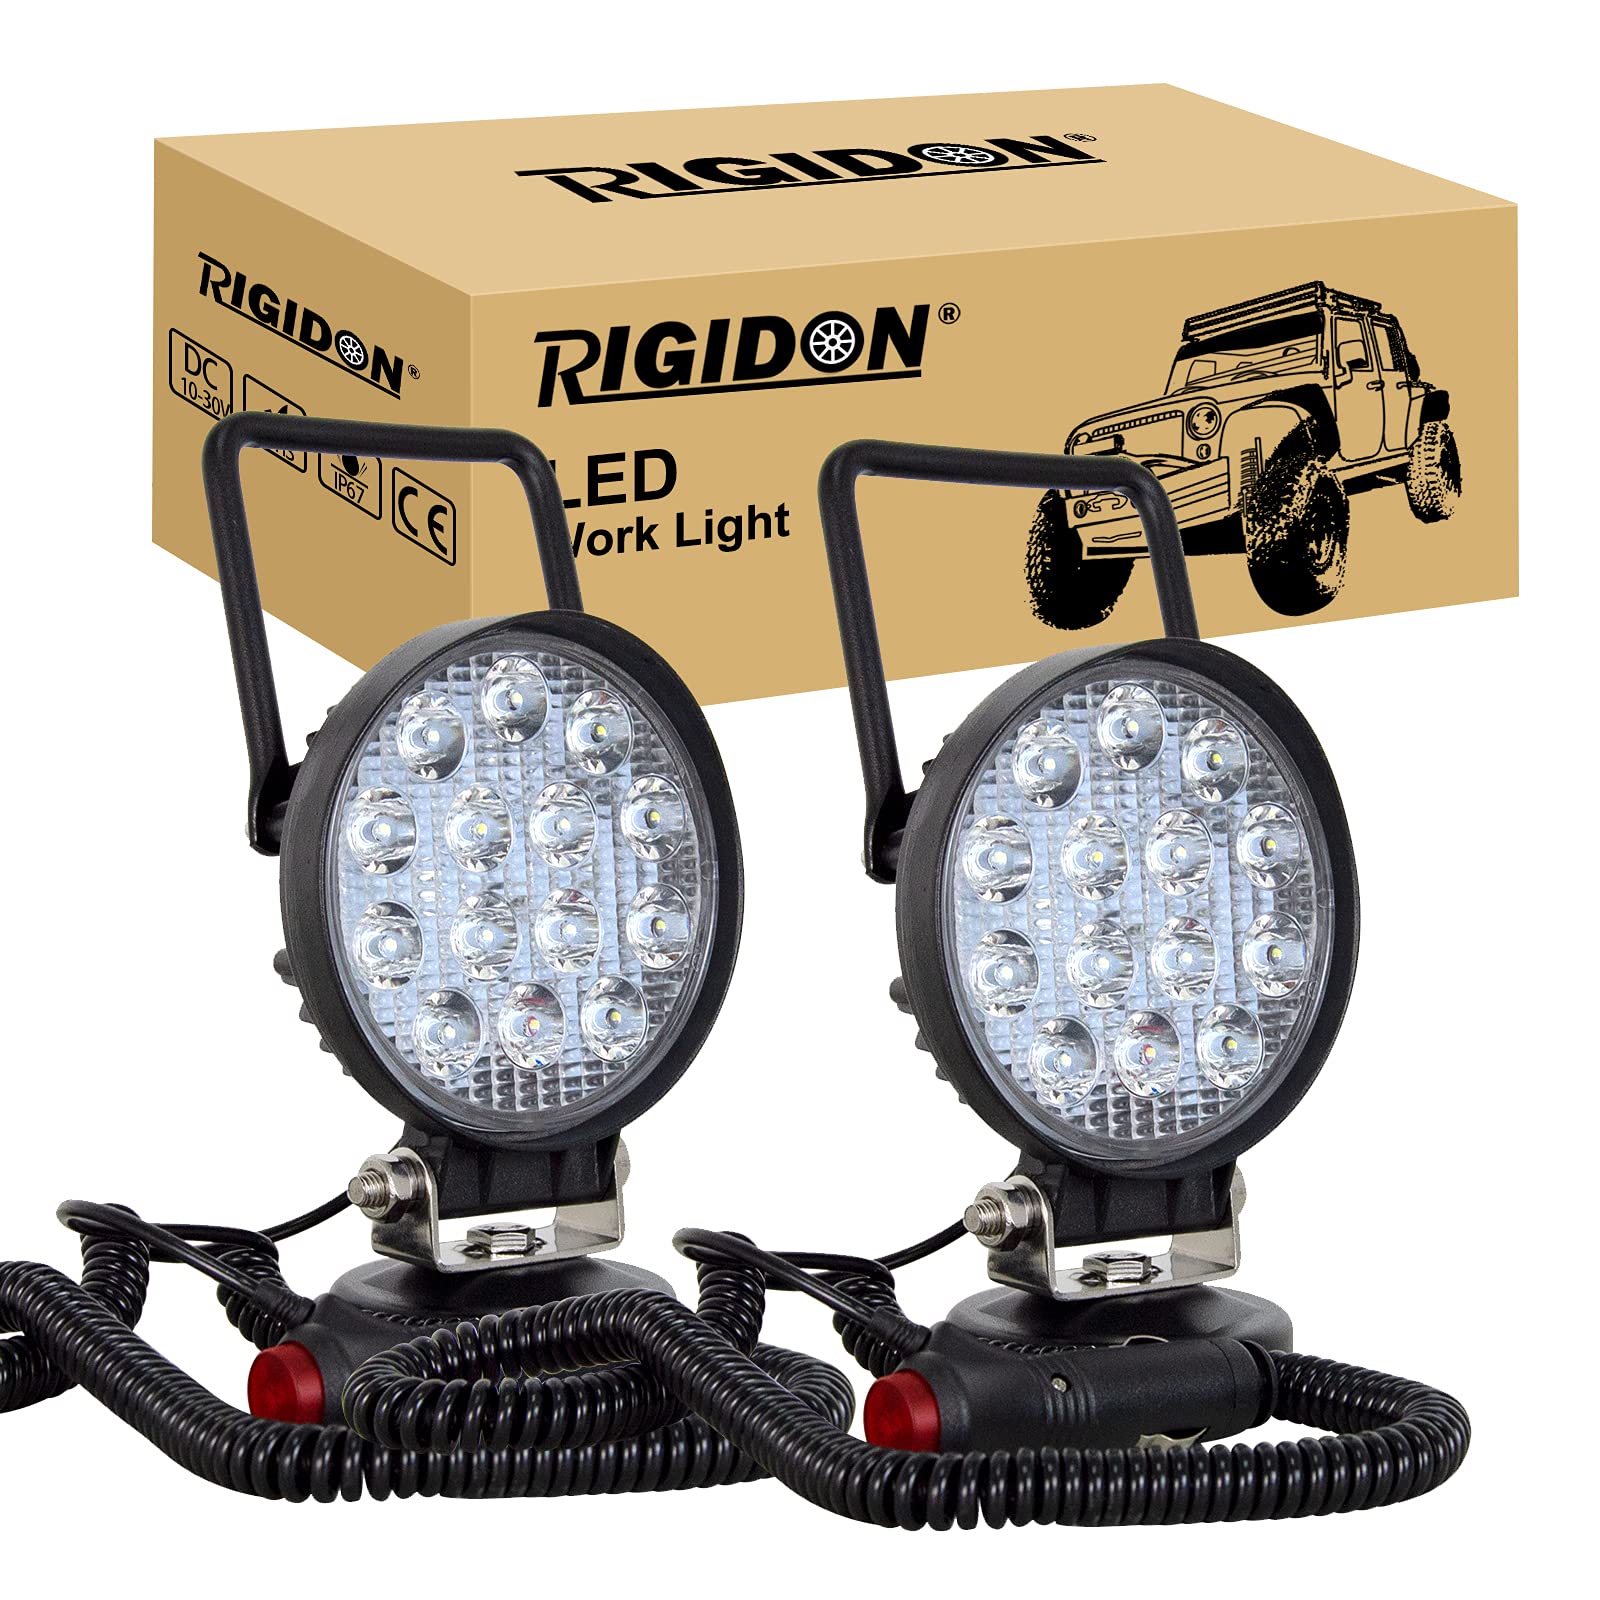 RIGIDON 2 Pcs Led arbeitsscheinwerfer mit magnetfuß, 12V 24V 4 Zoll 10cm 42W led Spot Strahler, offroad beleuchtung für Auto SUV ATV, Traktor, LKW, 4x4, Boot,6000K led suchscheinwerfer, arbeitslicht von RIGIDON